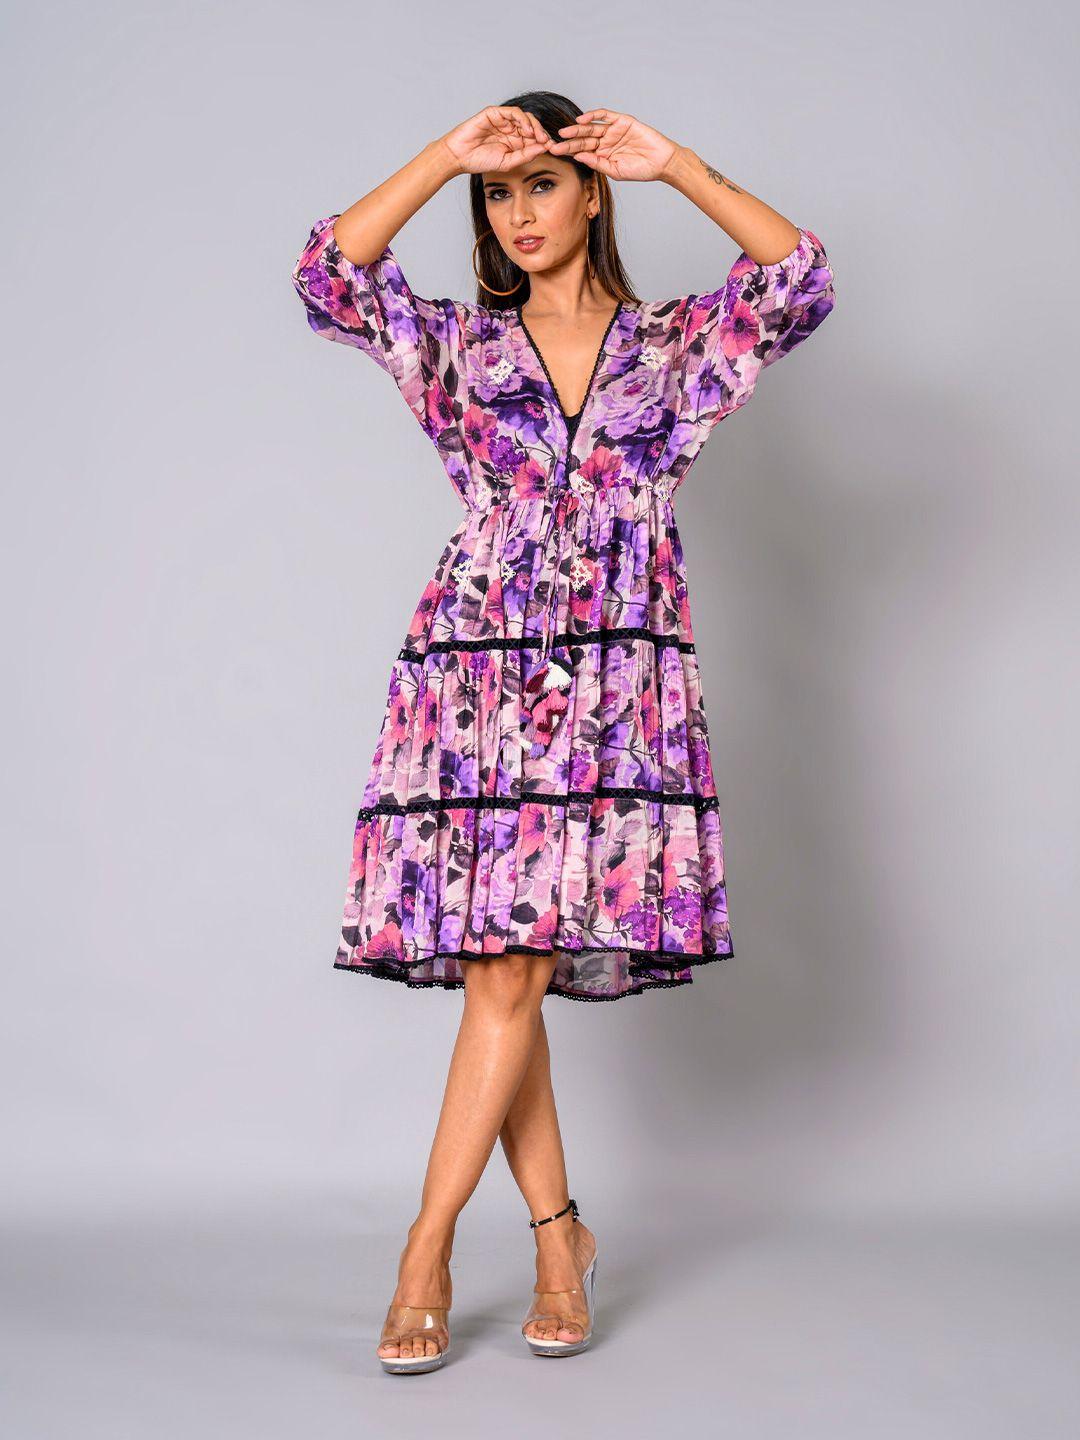 westified purple floral print fit & flare dress